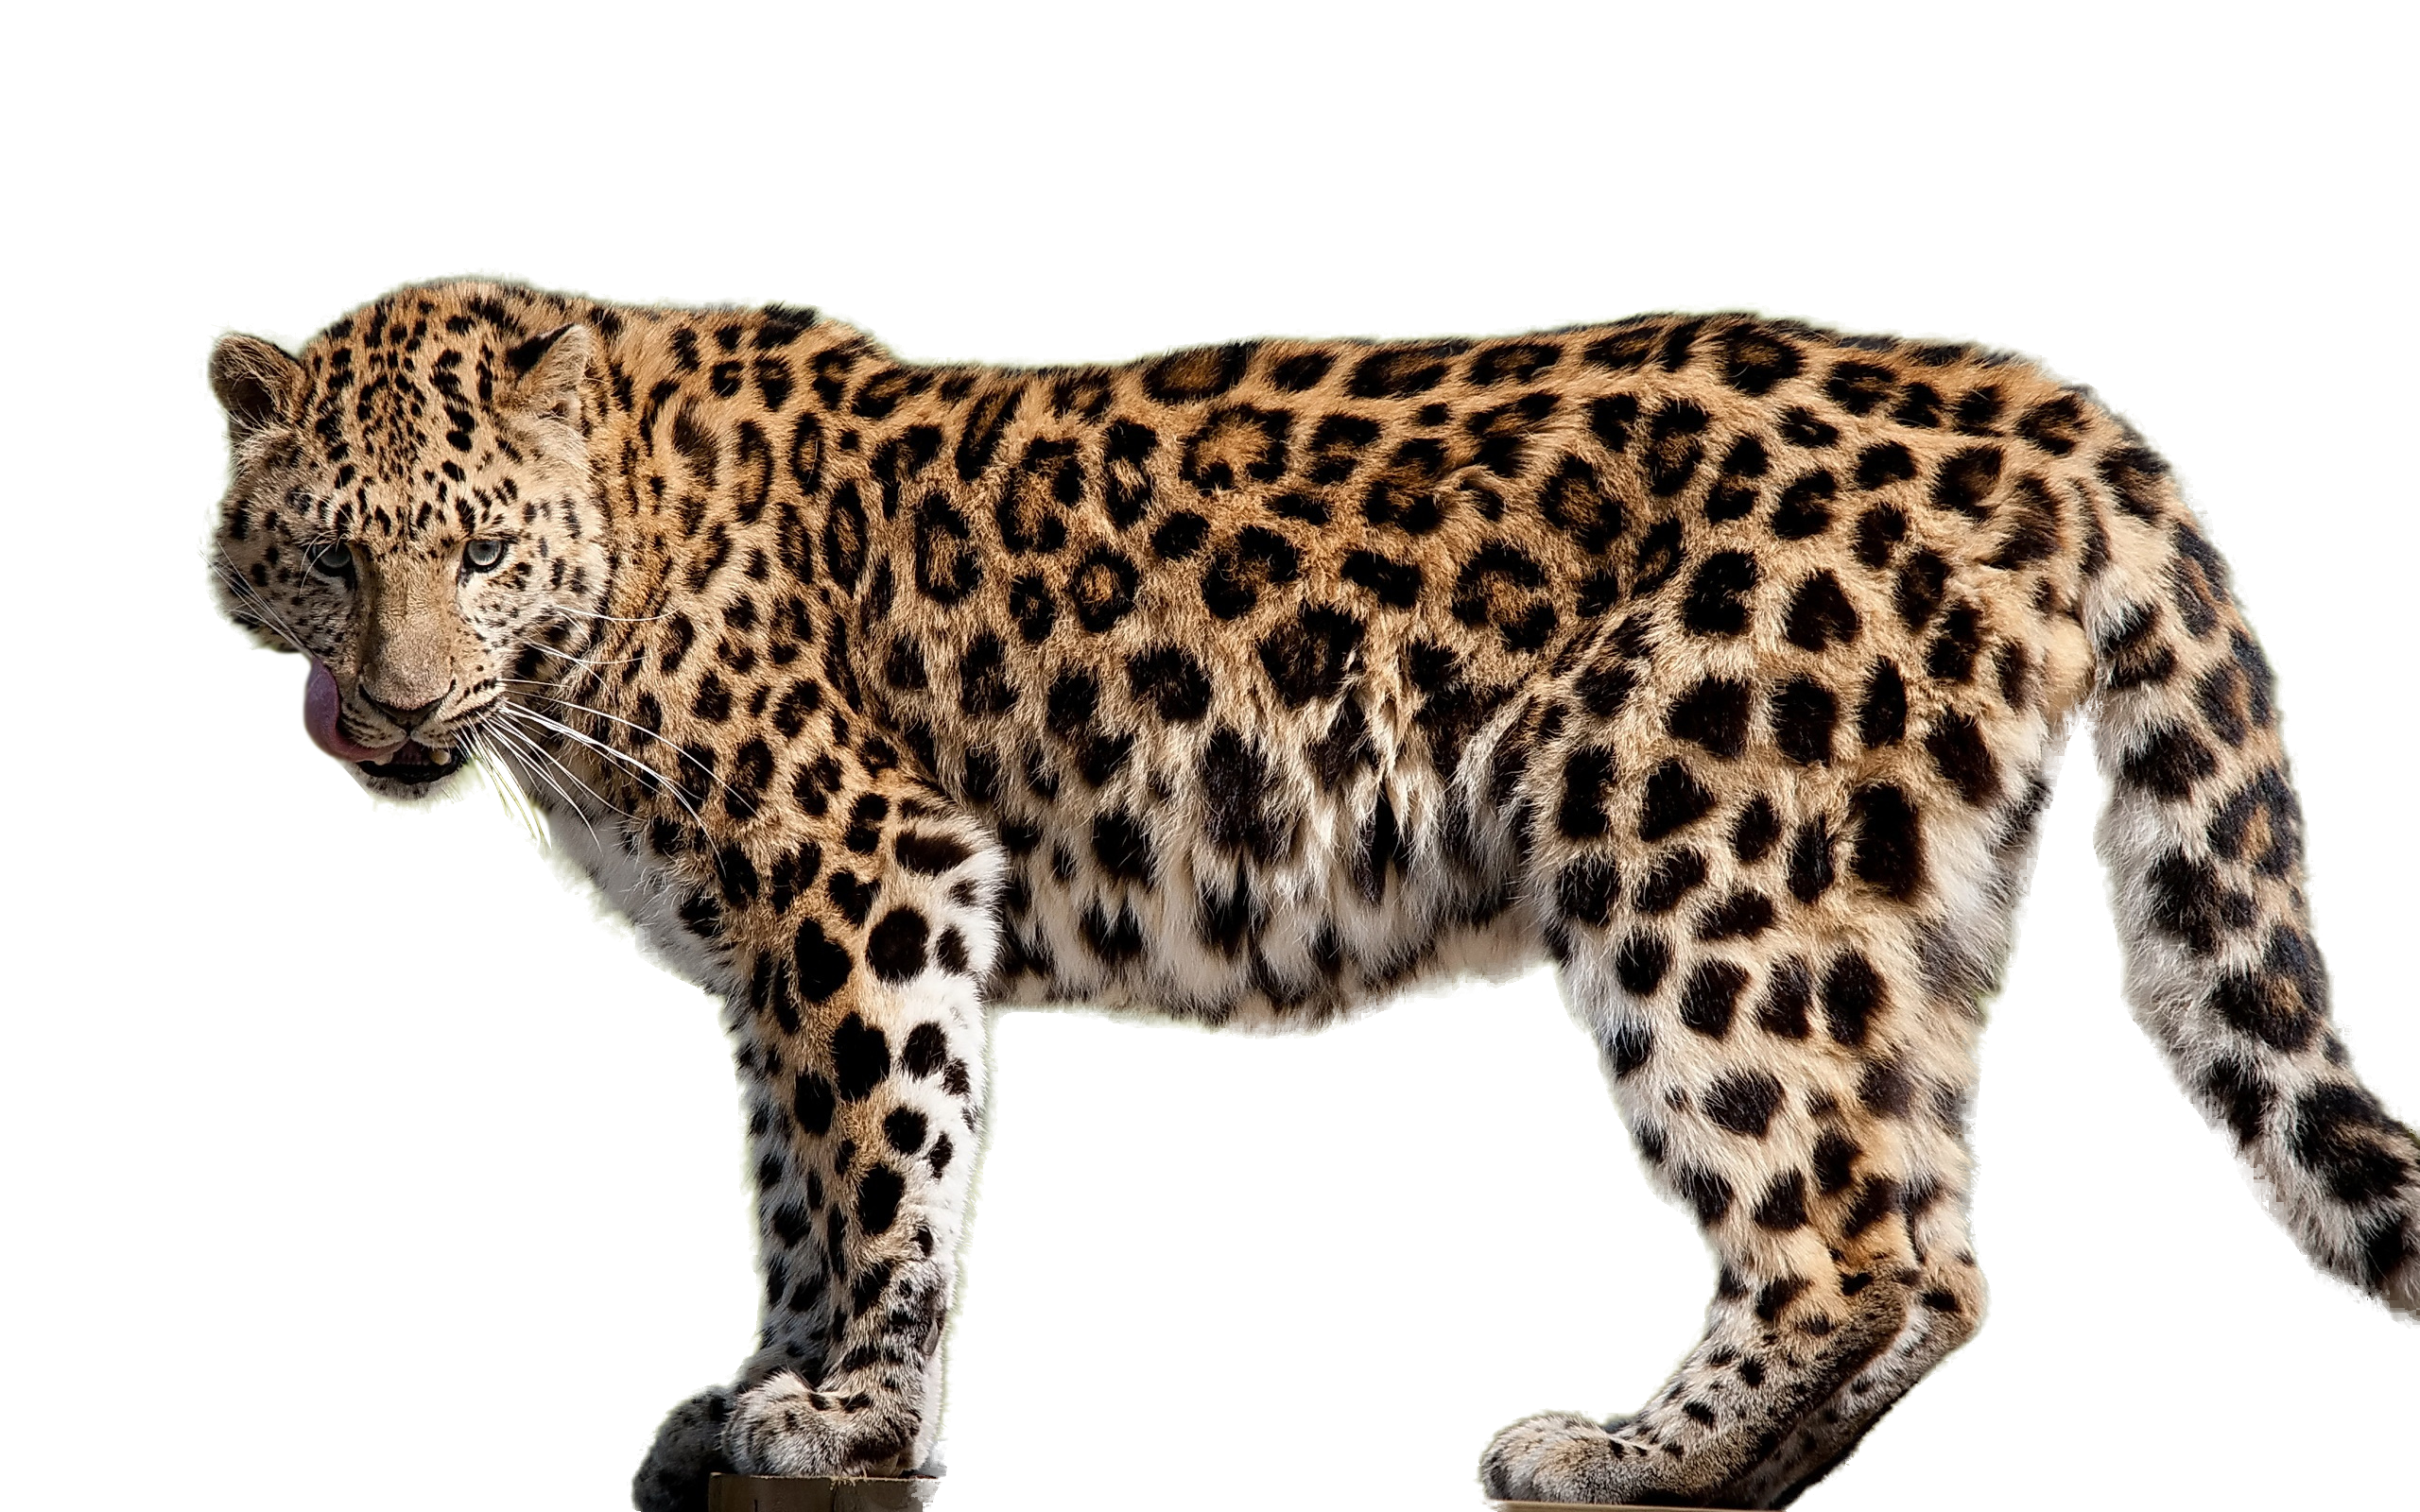 leopard clipart african leopard